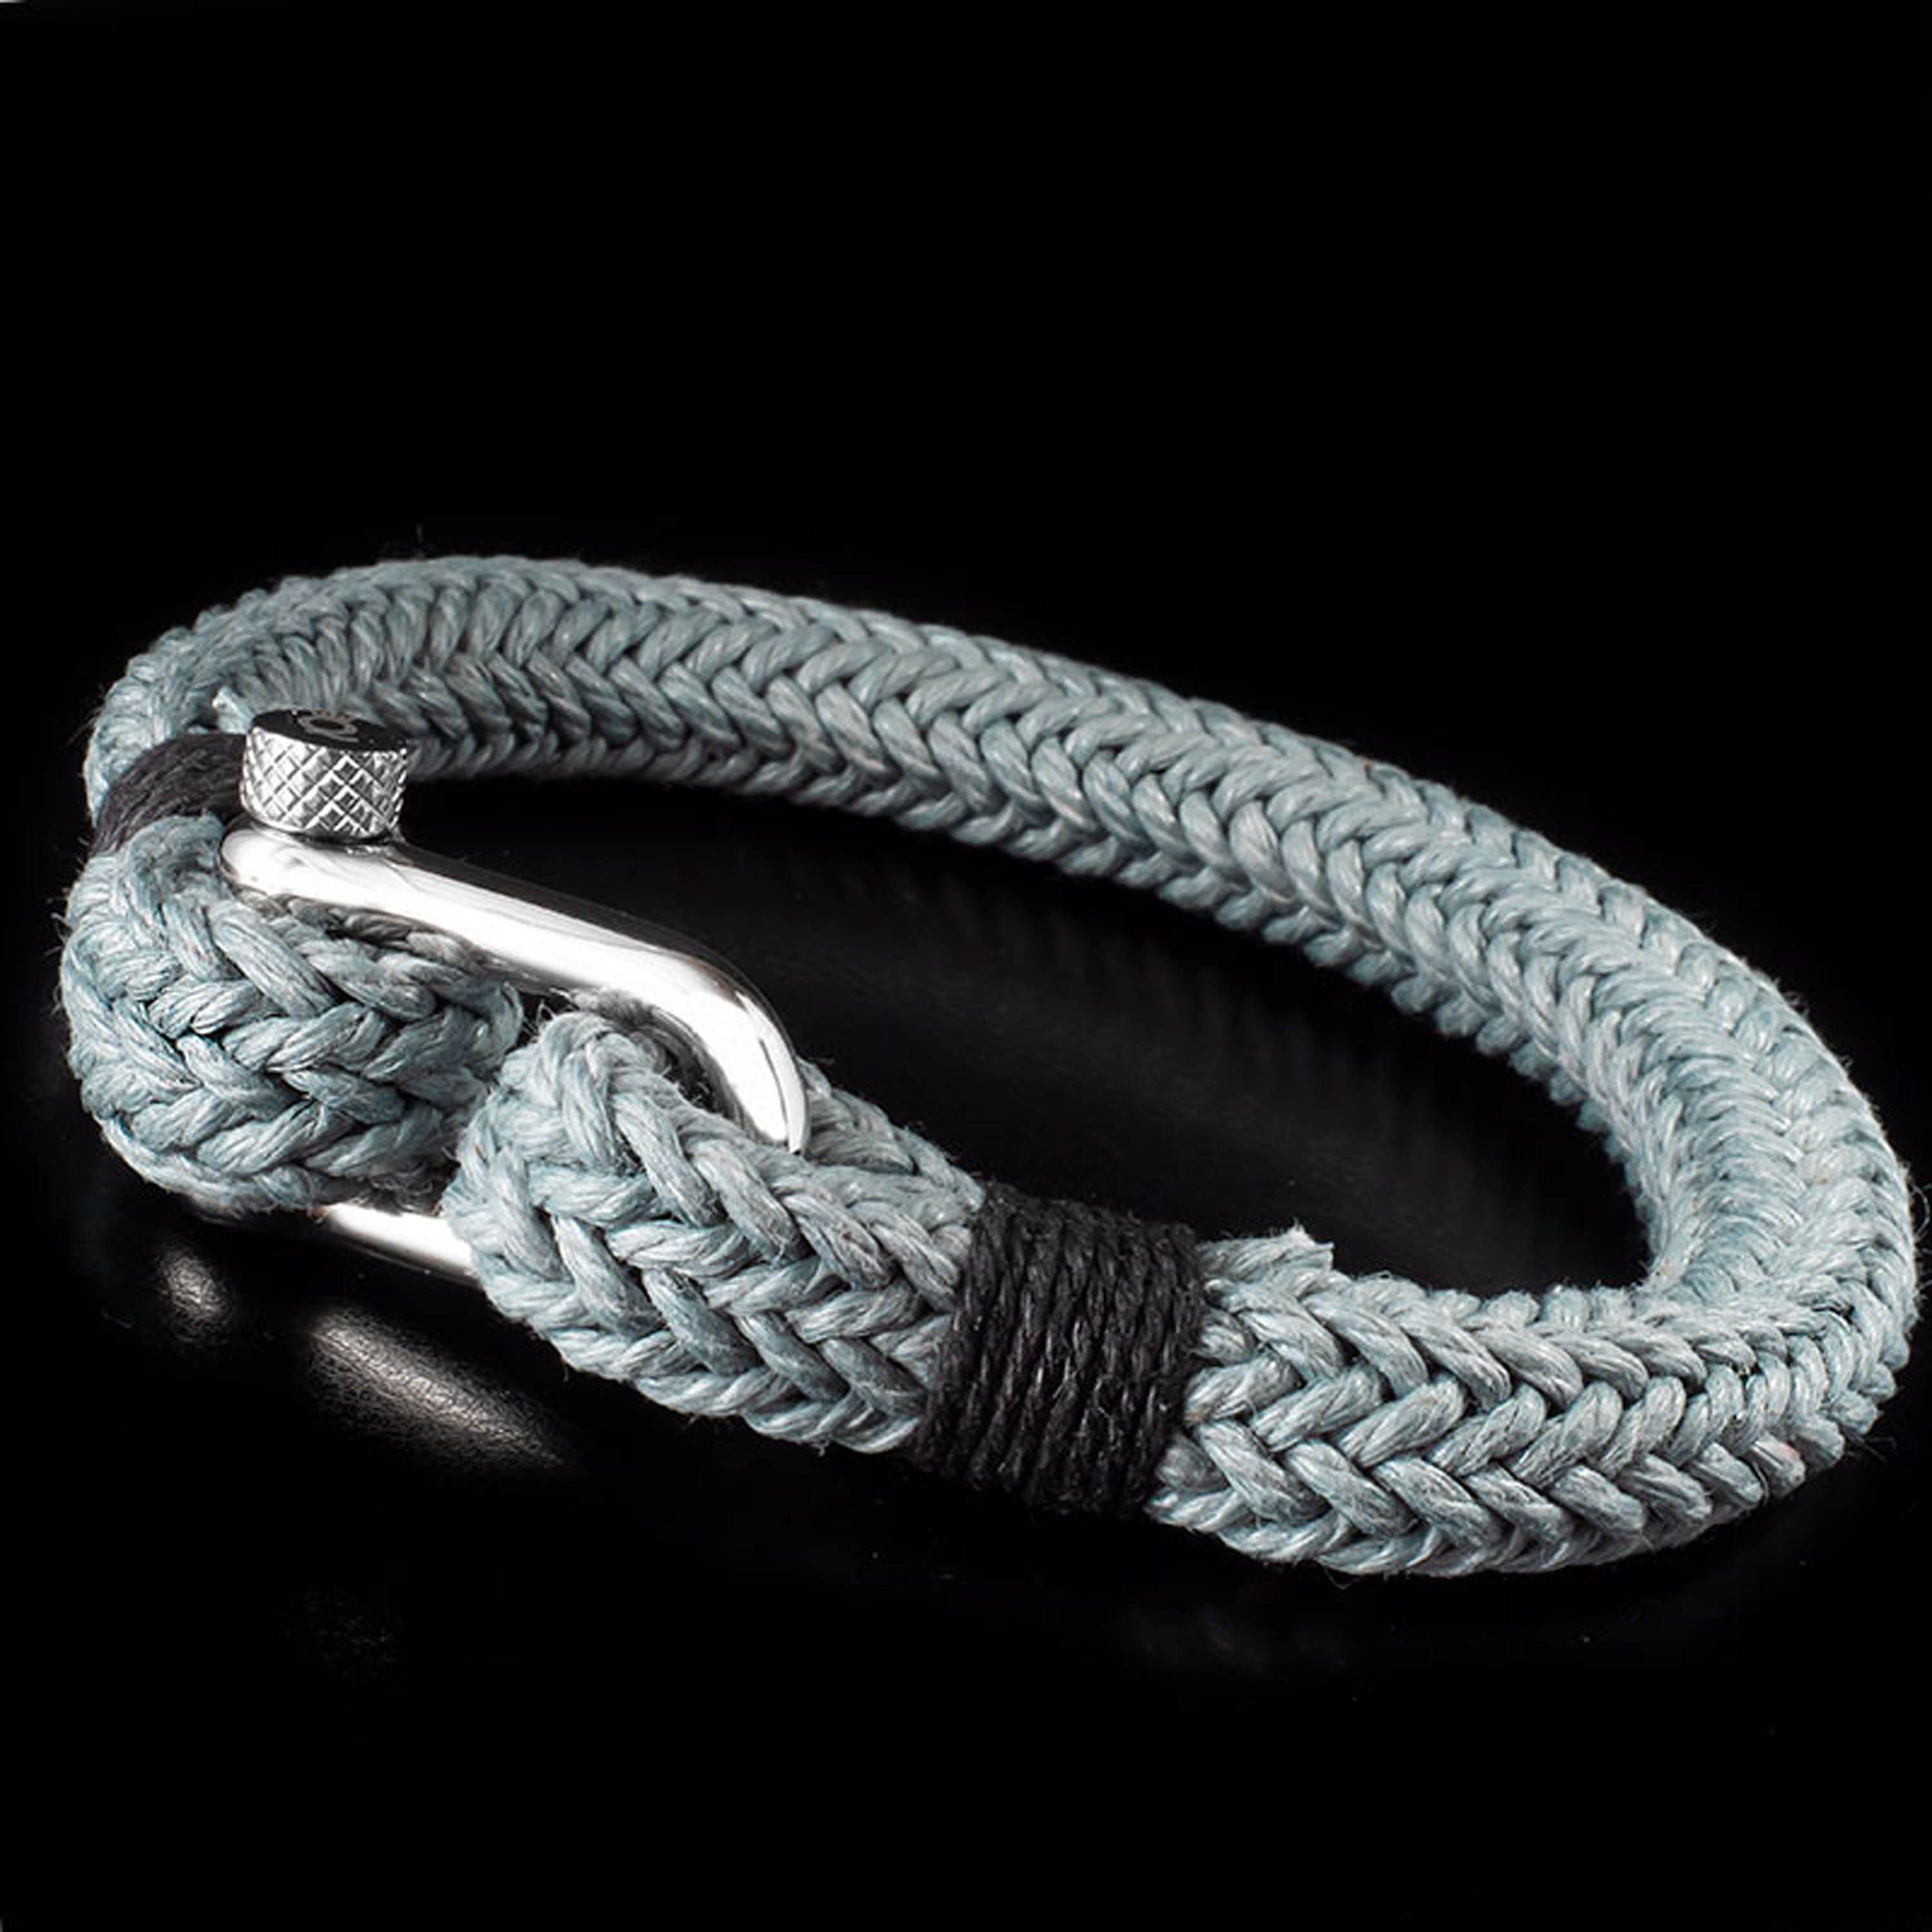 "AQUA" UNIQAL.de Armband aus Segeltau, (Edelstahl, Style, nautics, handgefertigt) Schäckel Segeltau Armband verschluss Nerissa Maritime Casual